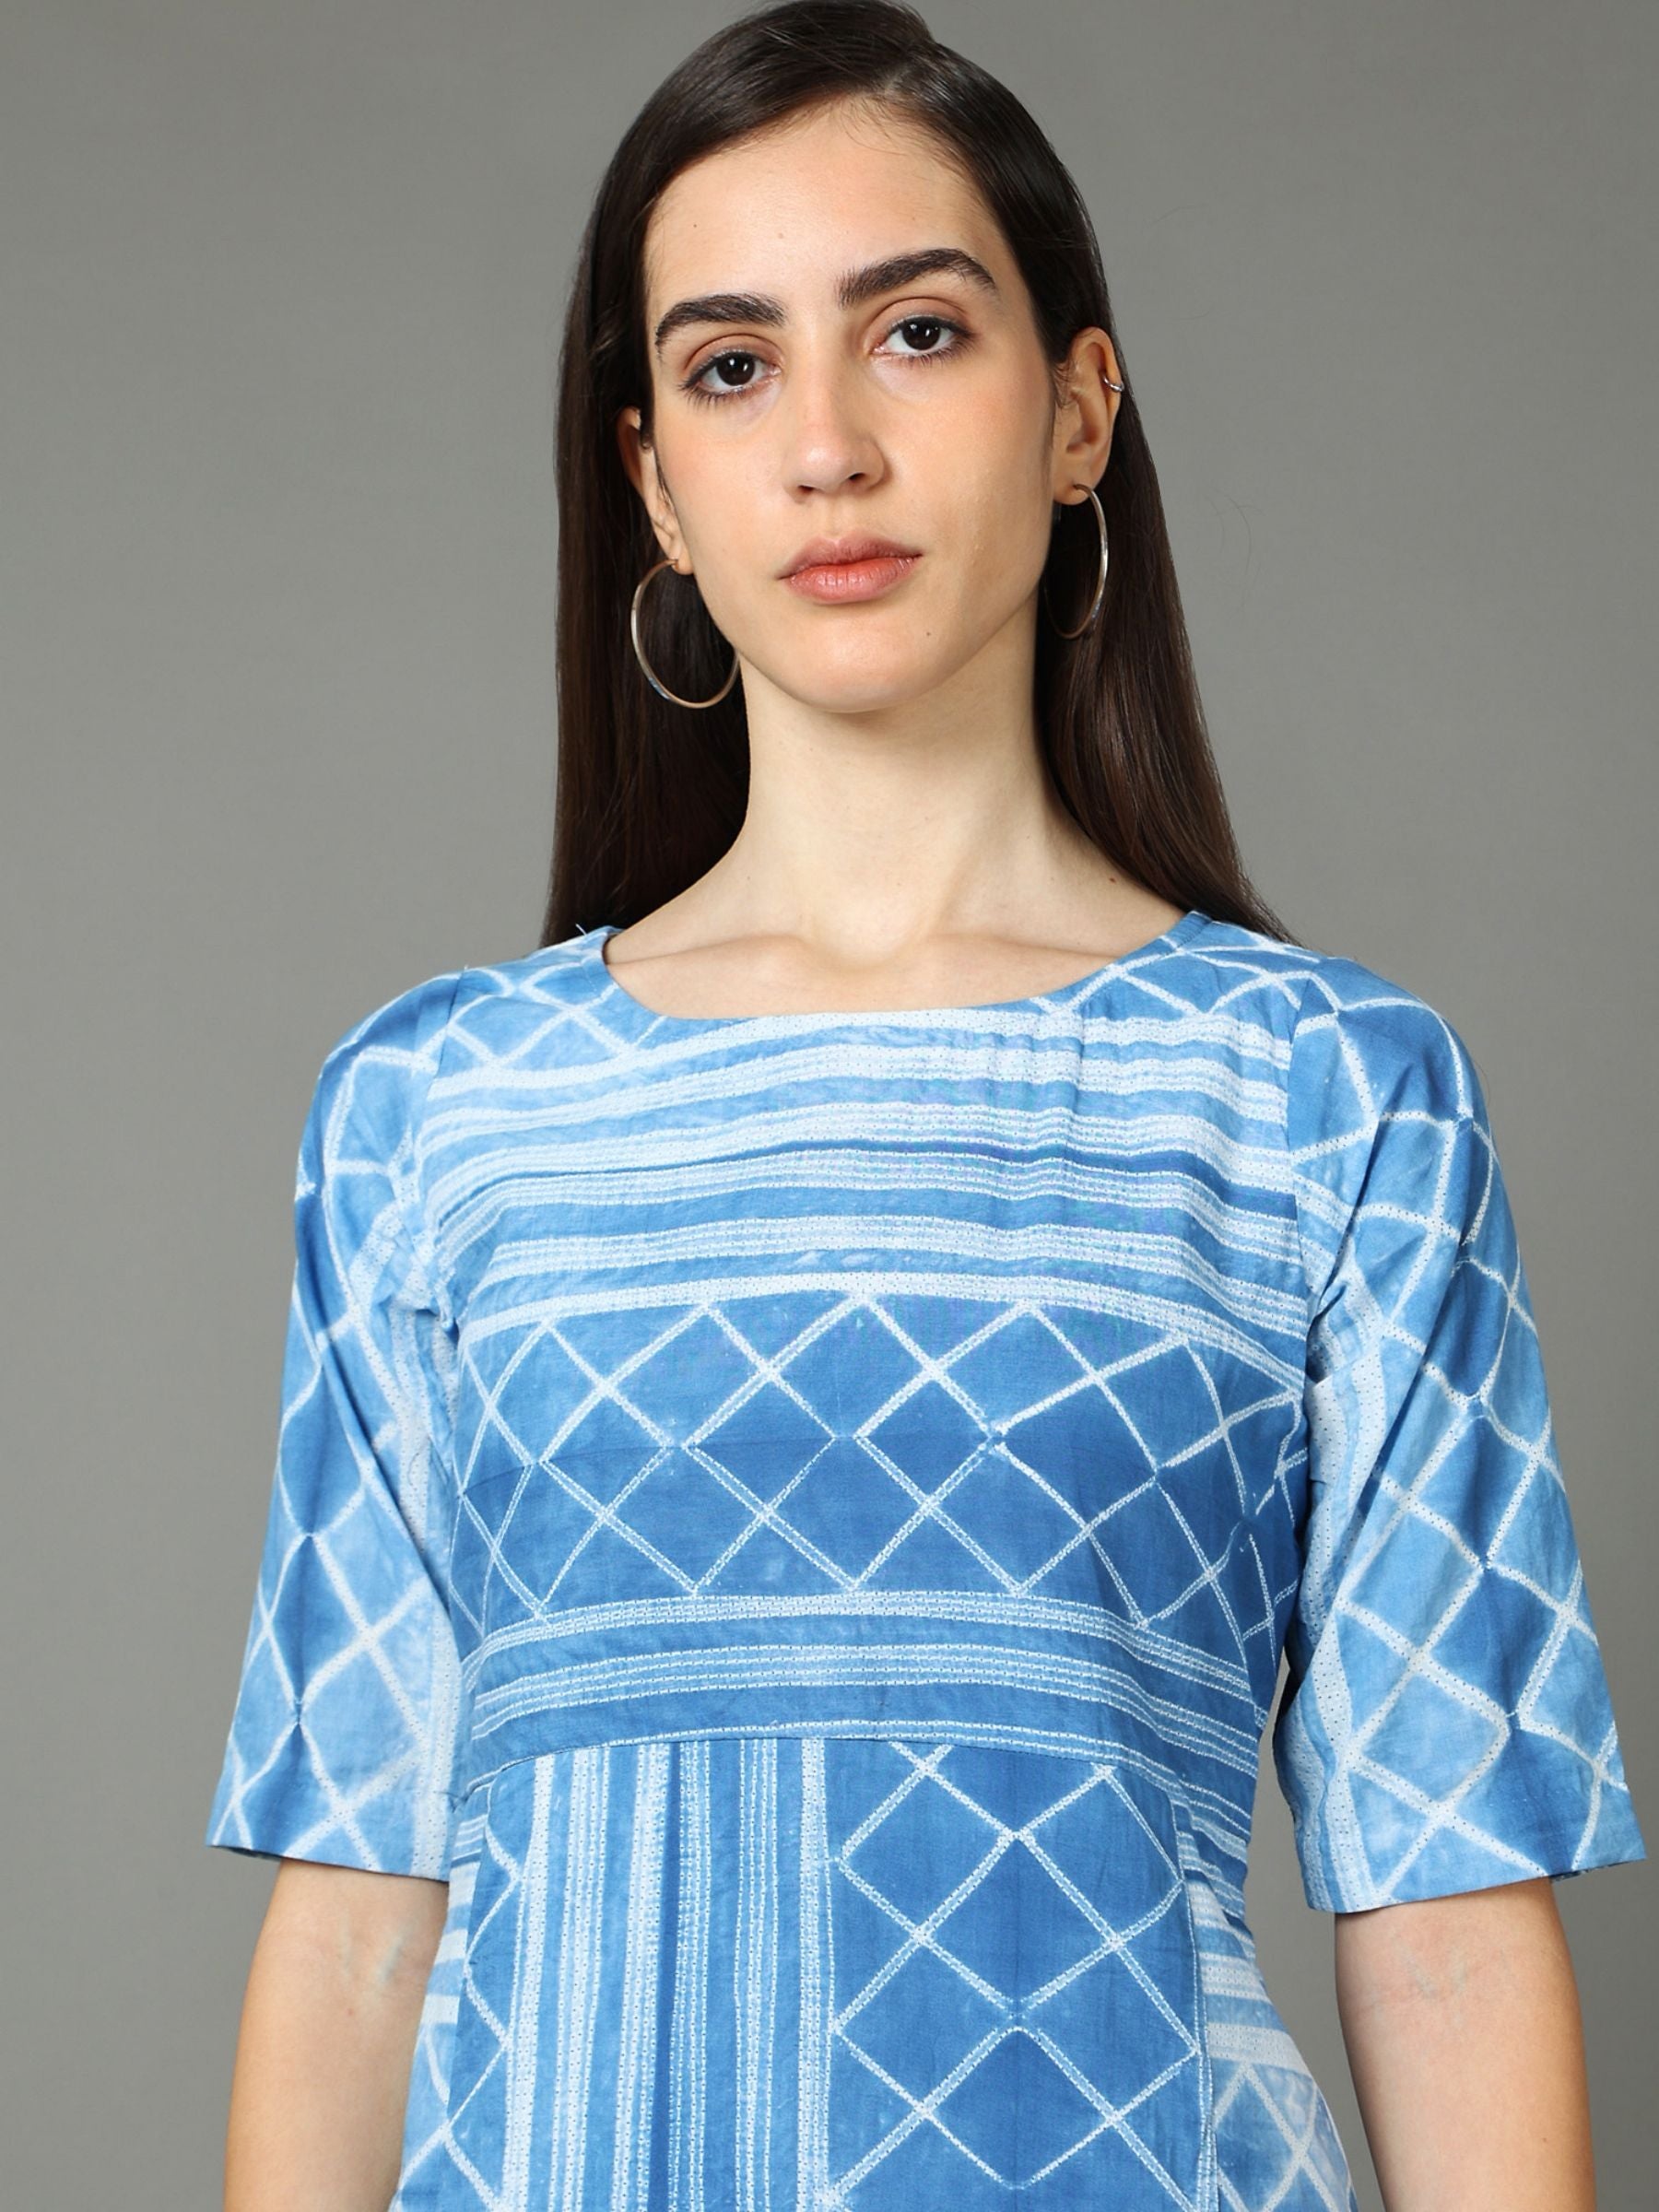 'Lapis' Hand-dyed Shibori Pure Cotton Dress